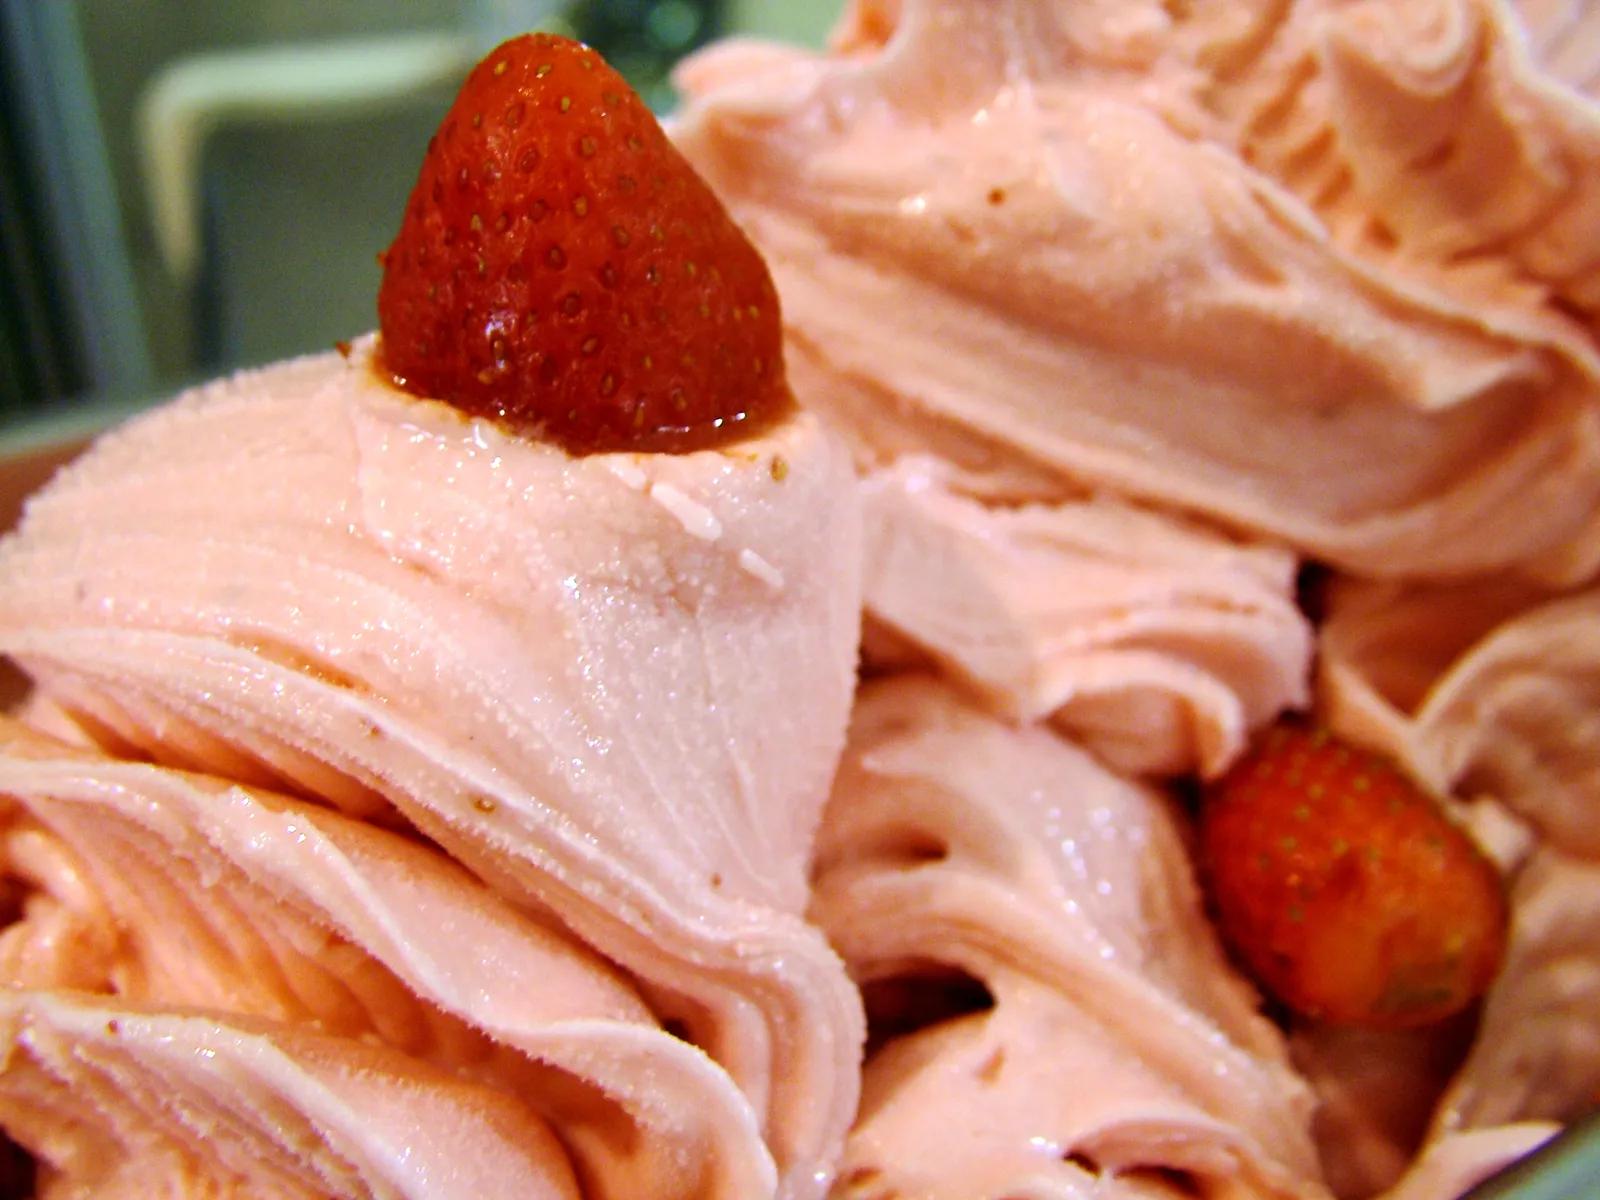 File:Strawberry Ice Cream with Strawberries 01.jpg - Wikimedia Commons